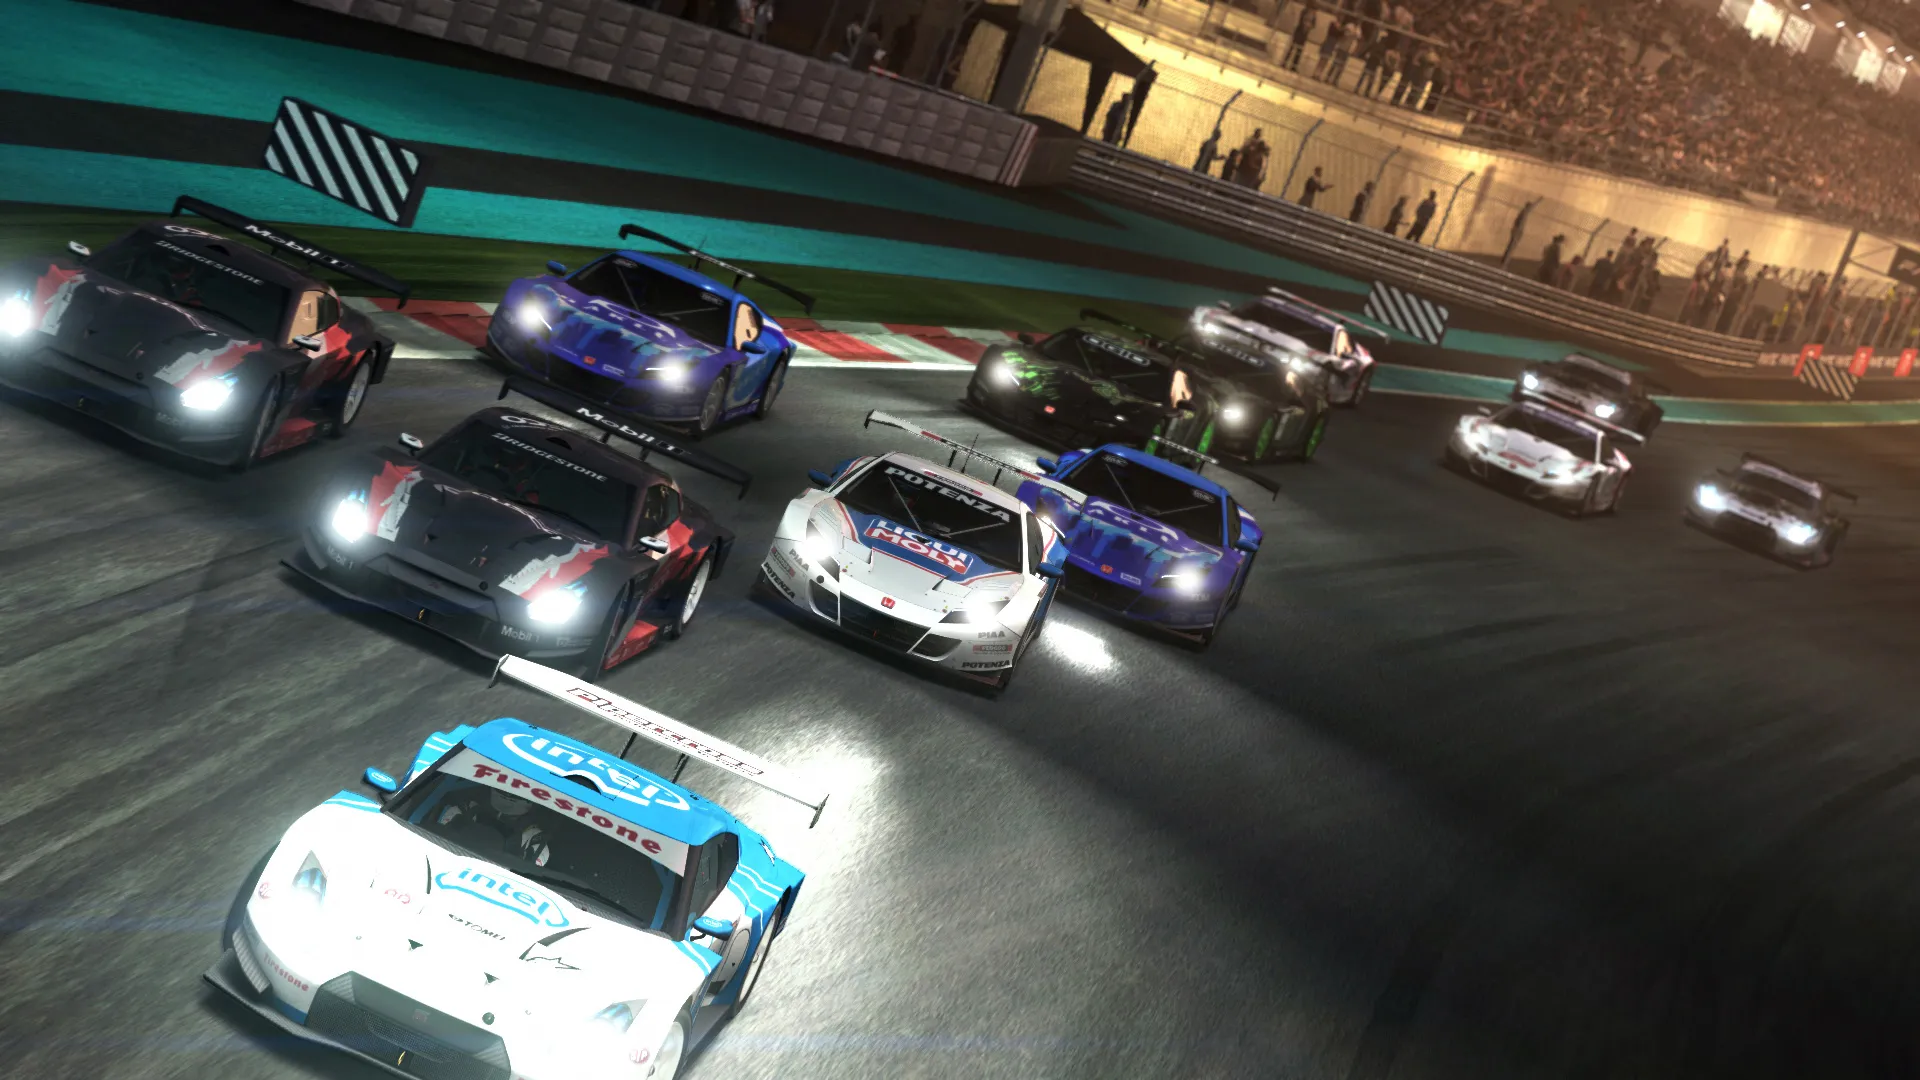 Review Grid Autosport